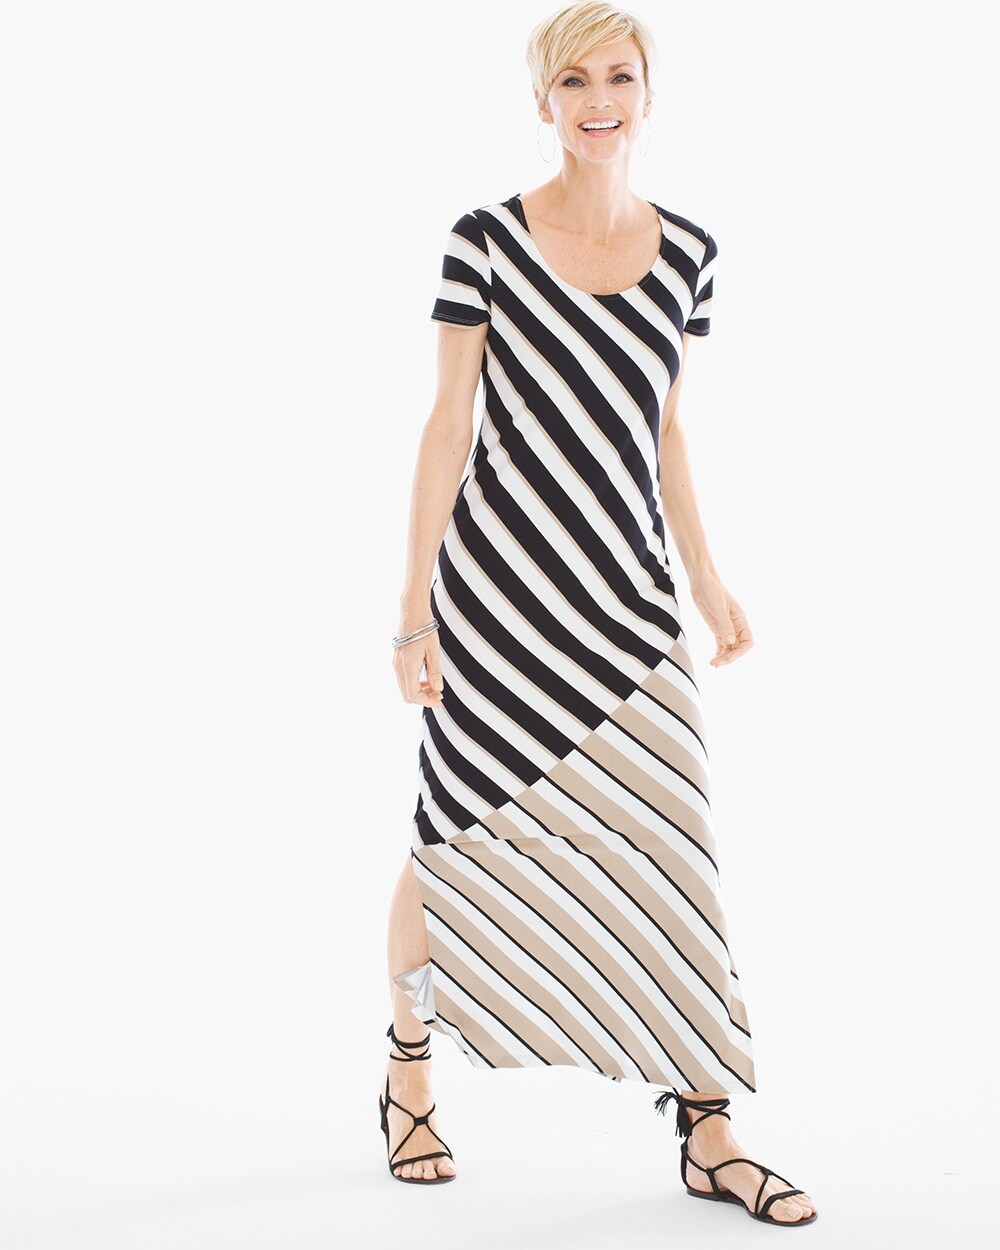 Zenergy Diagonal Stripe Dress